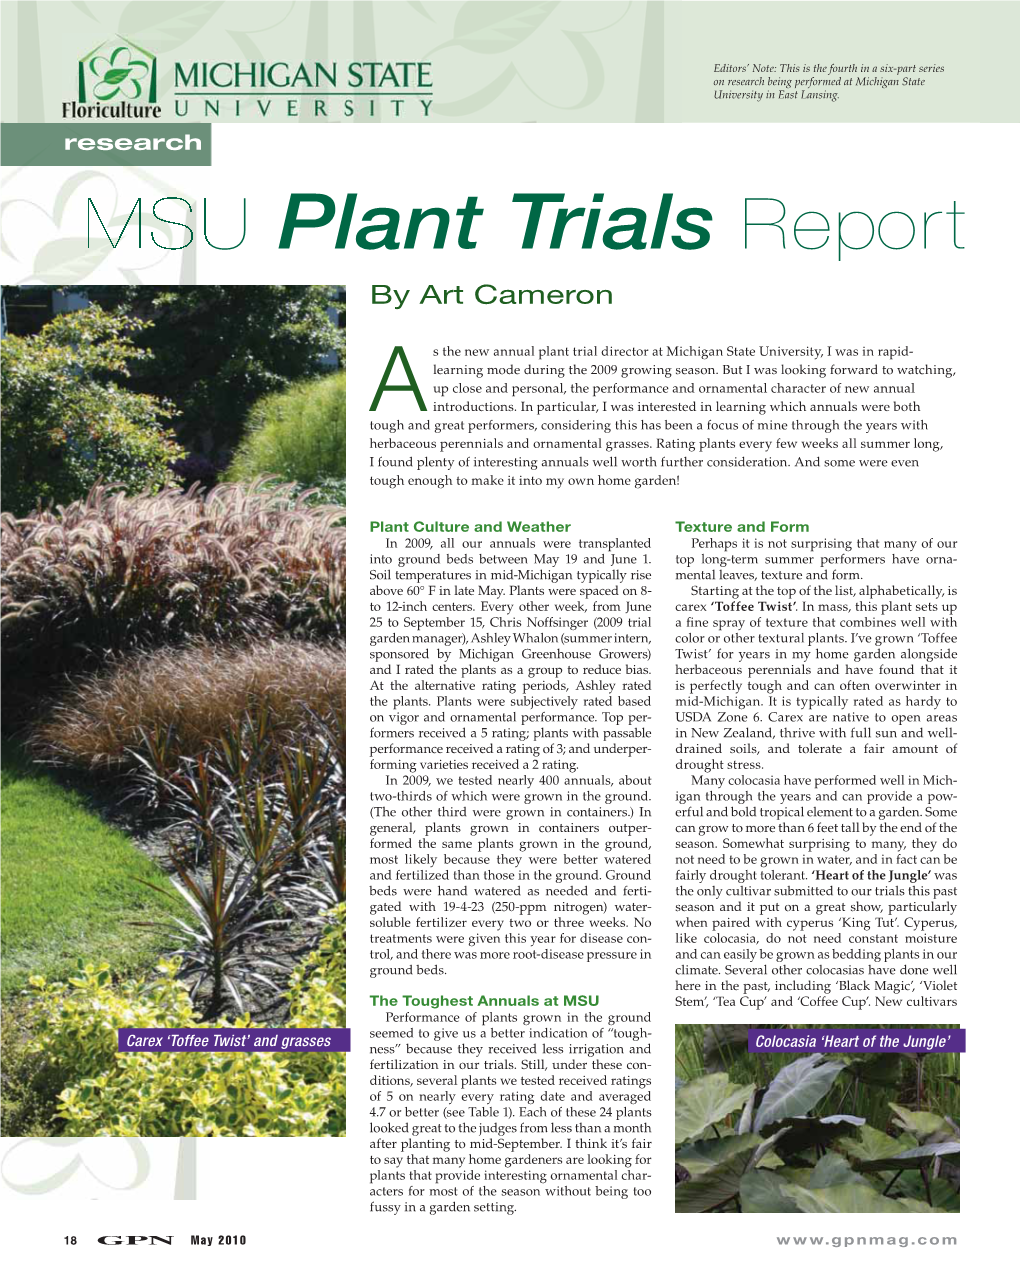 MSU Plant Trials Report by Art Cameron